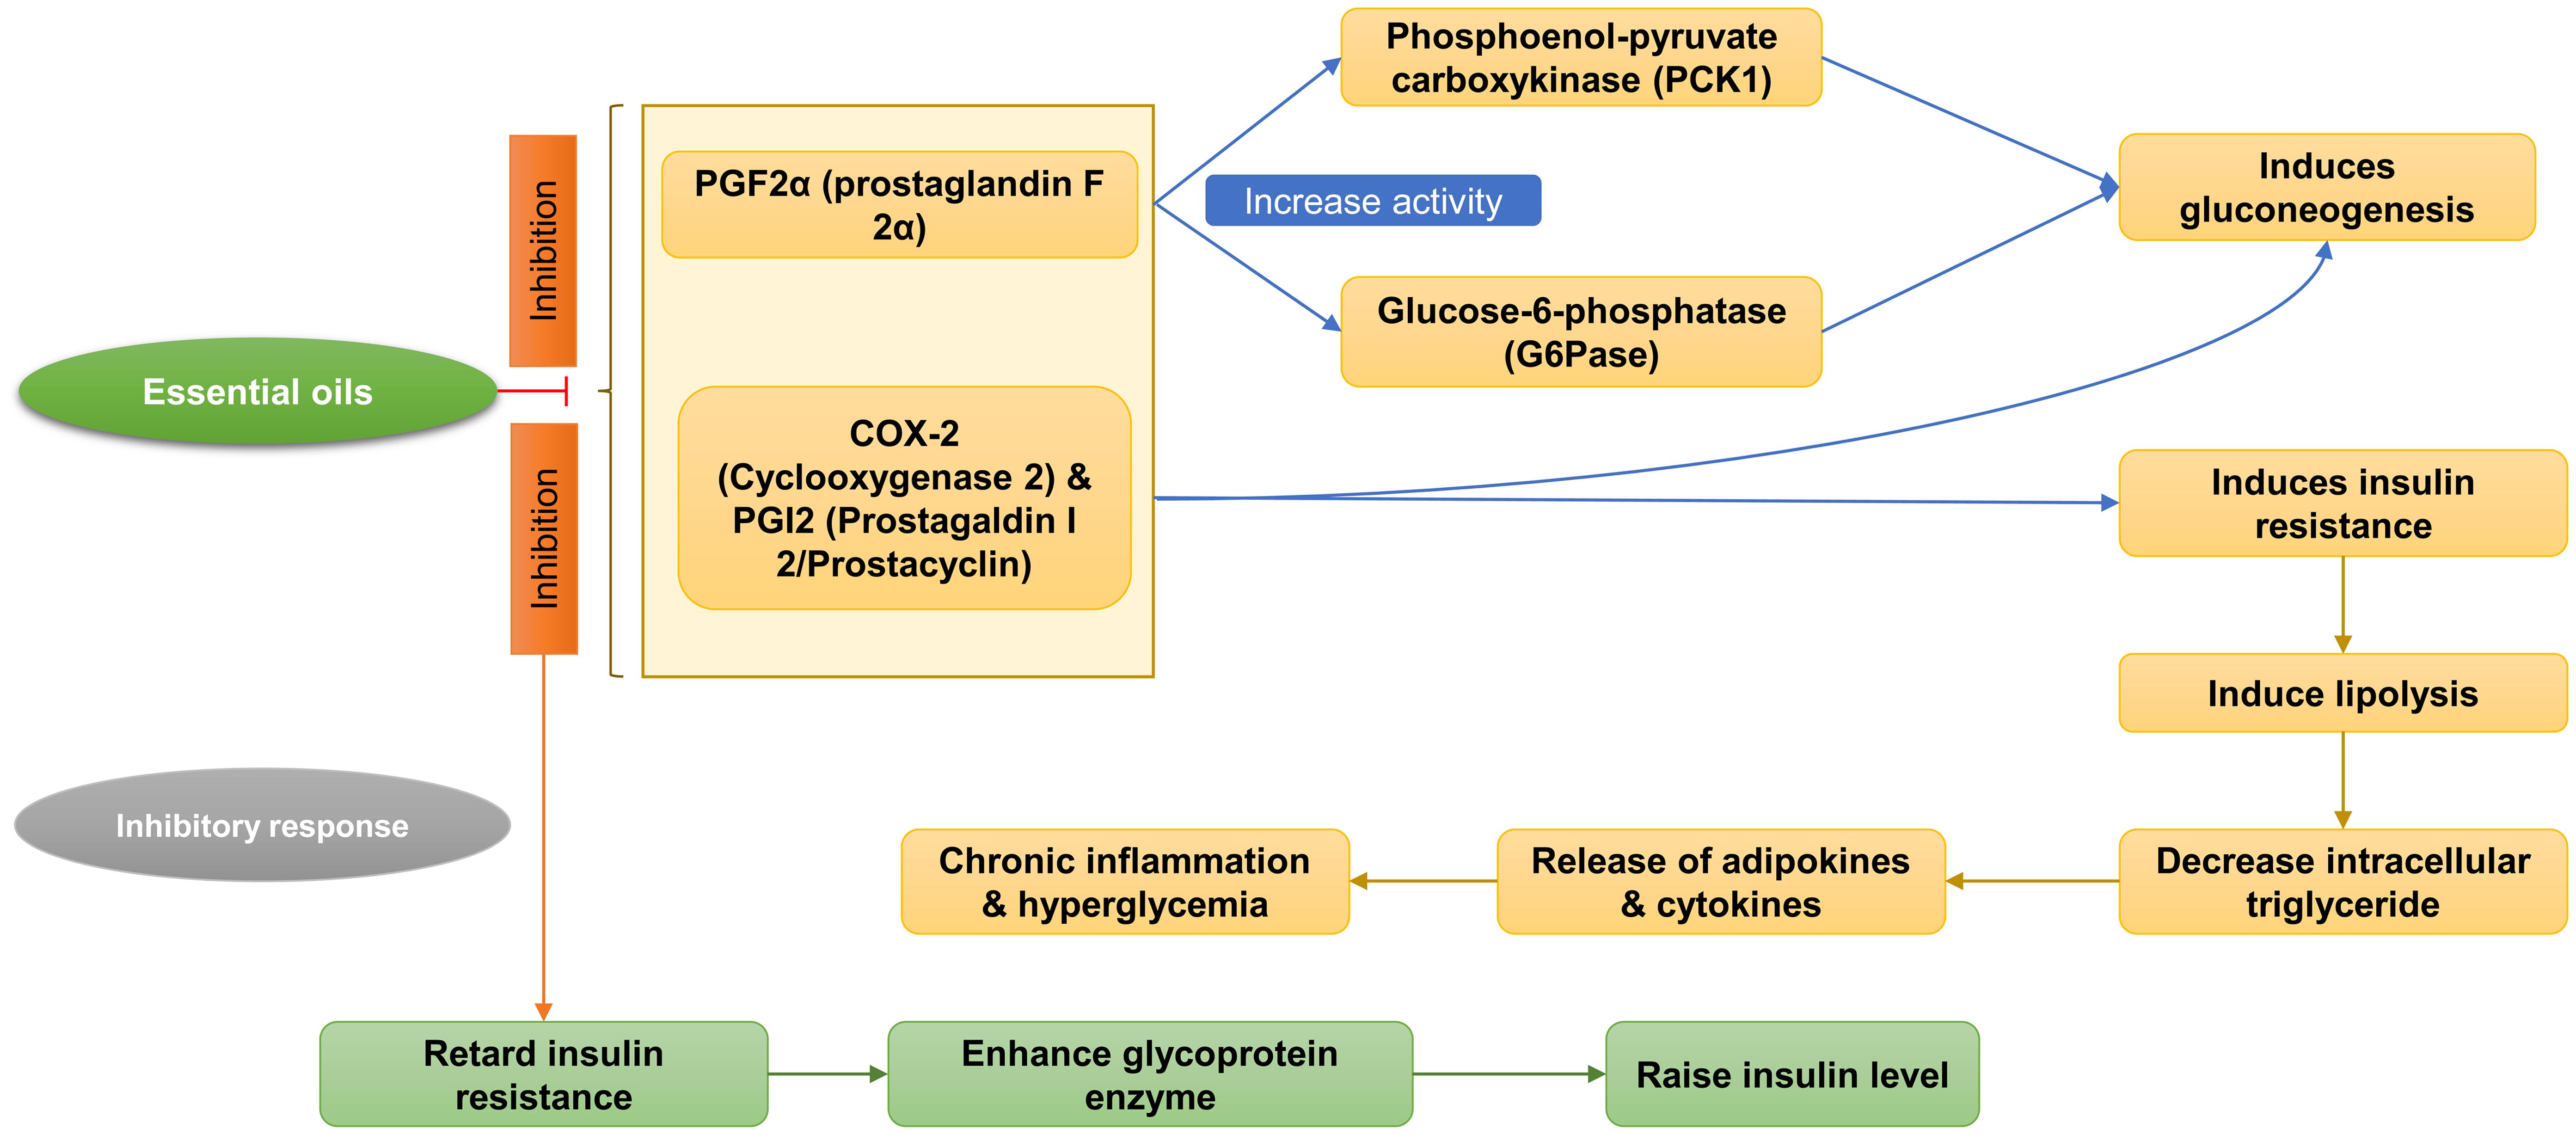 Anti-diabetic mechanism of essential oils via inhibition of prostaglandins.